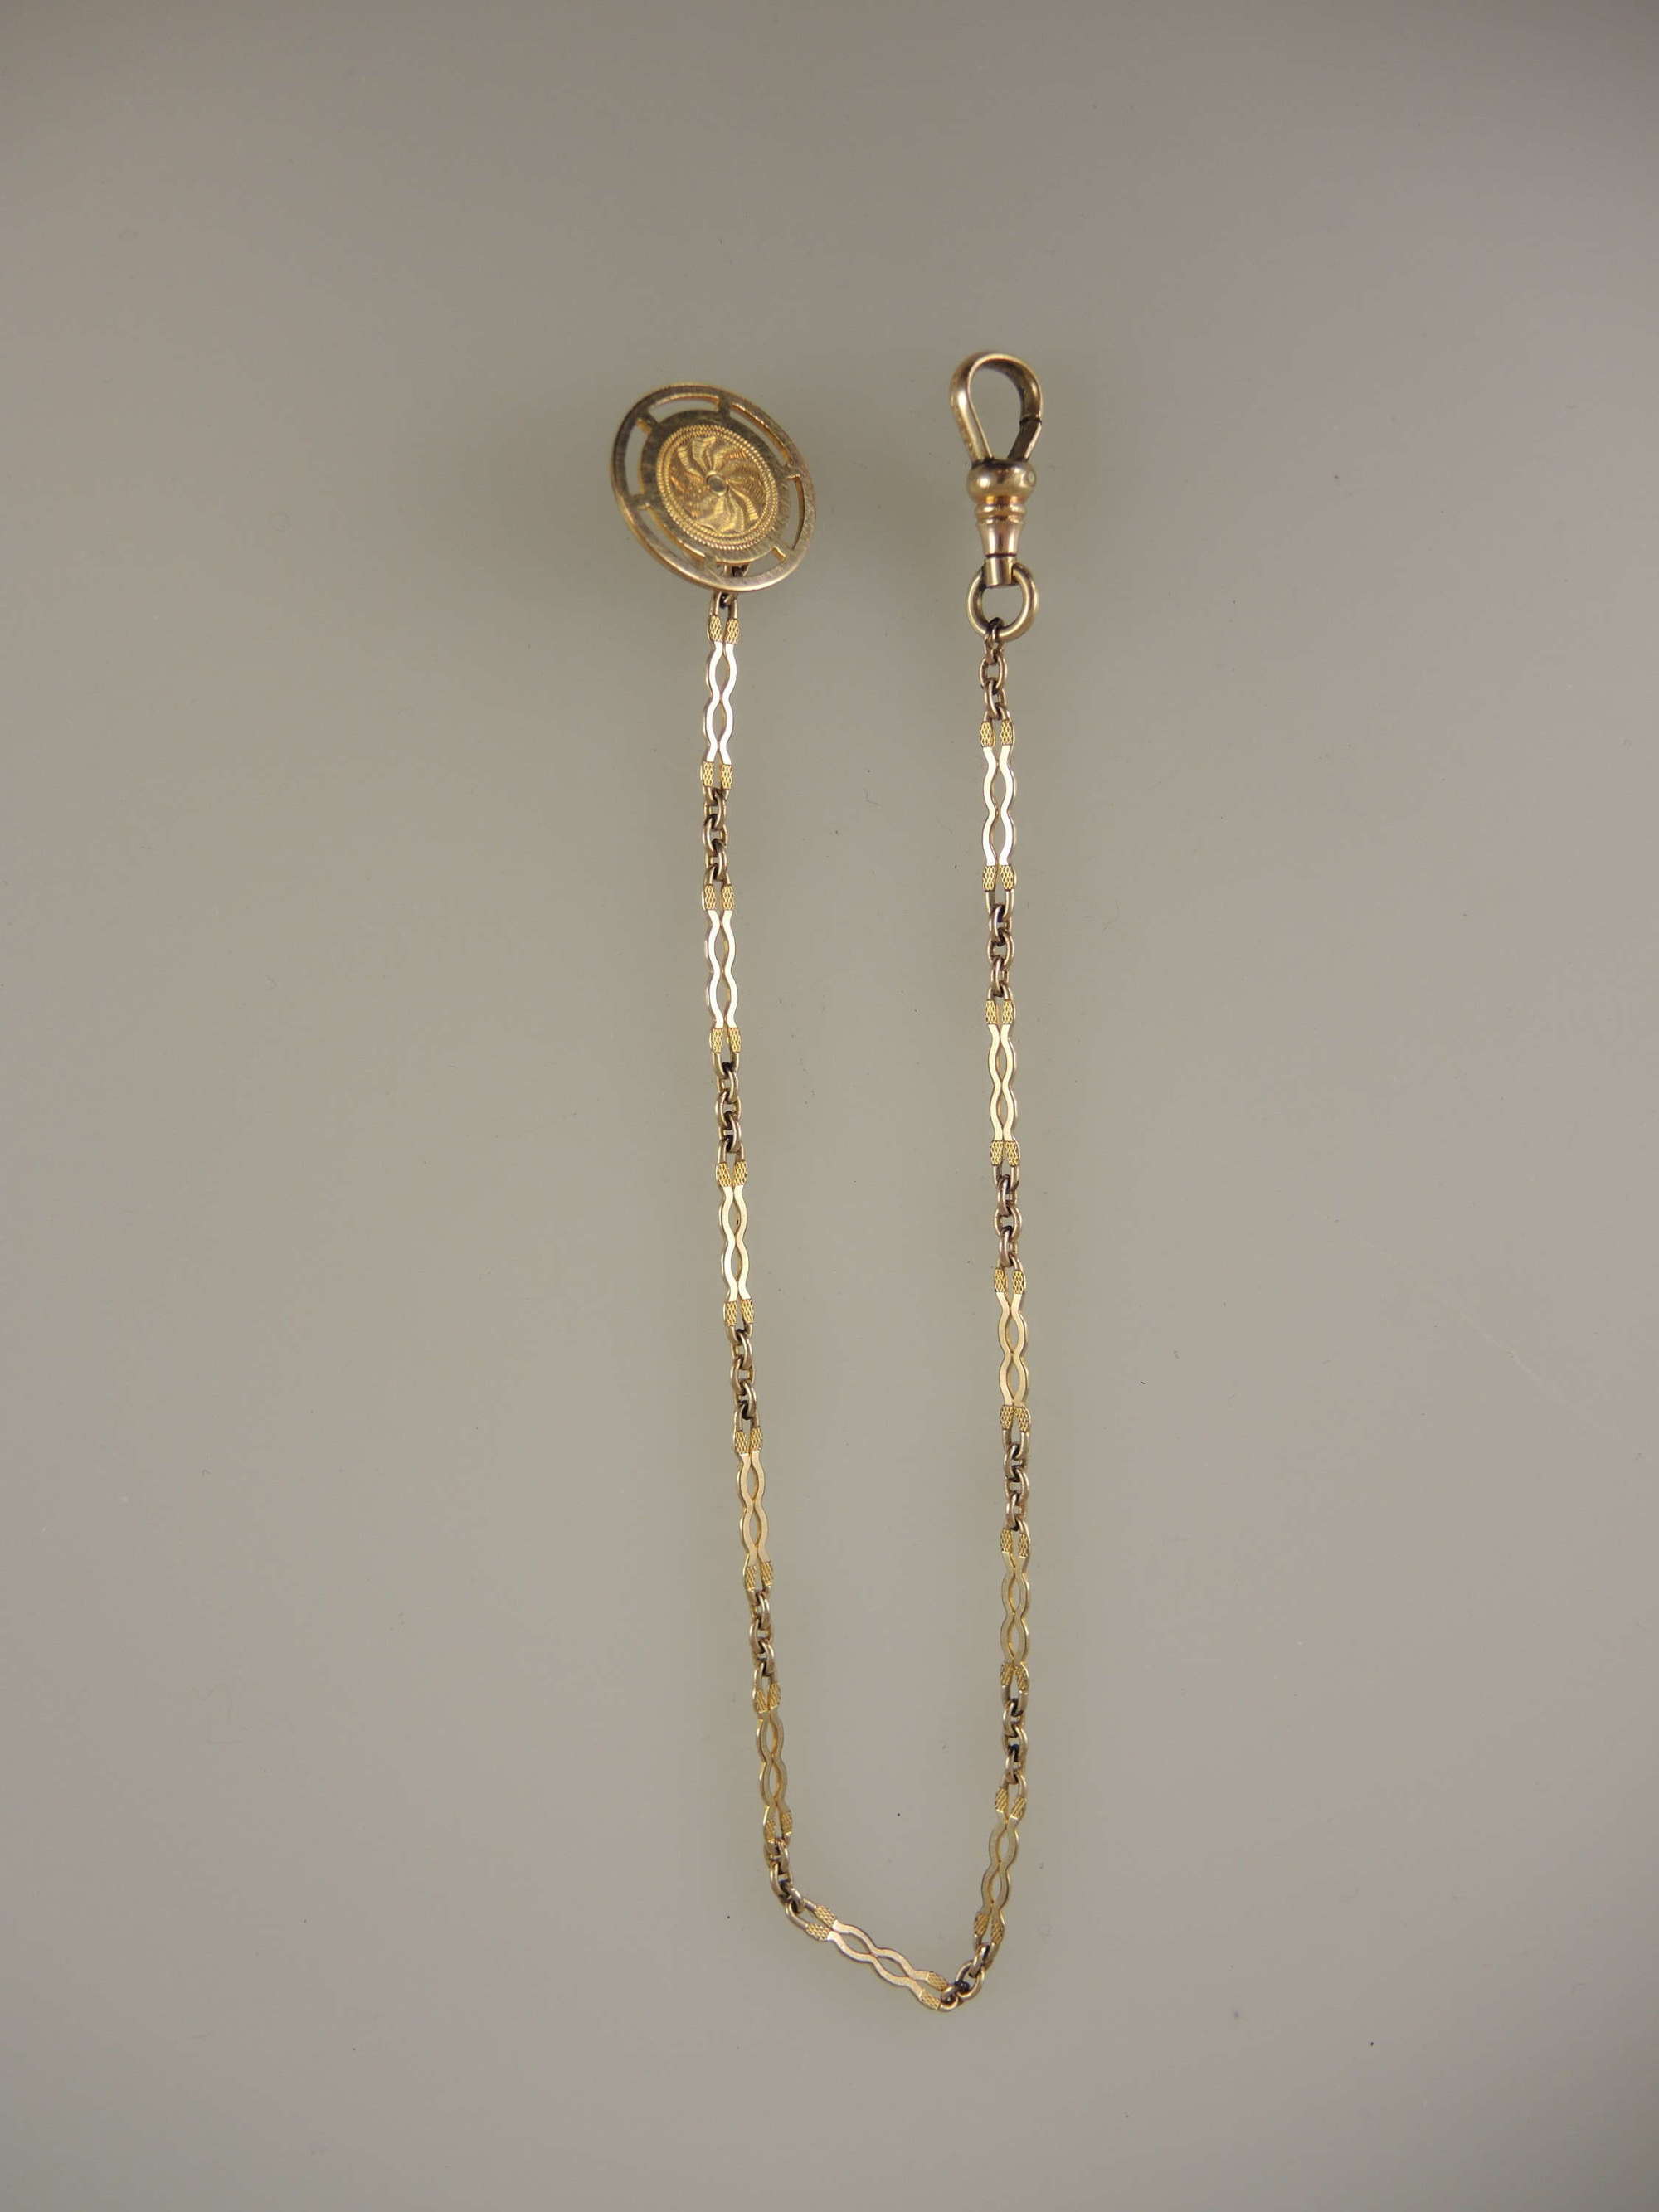 Elegant gold plated pocket watch chain for a blazer pocket c1910